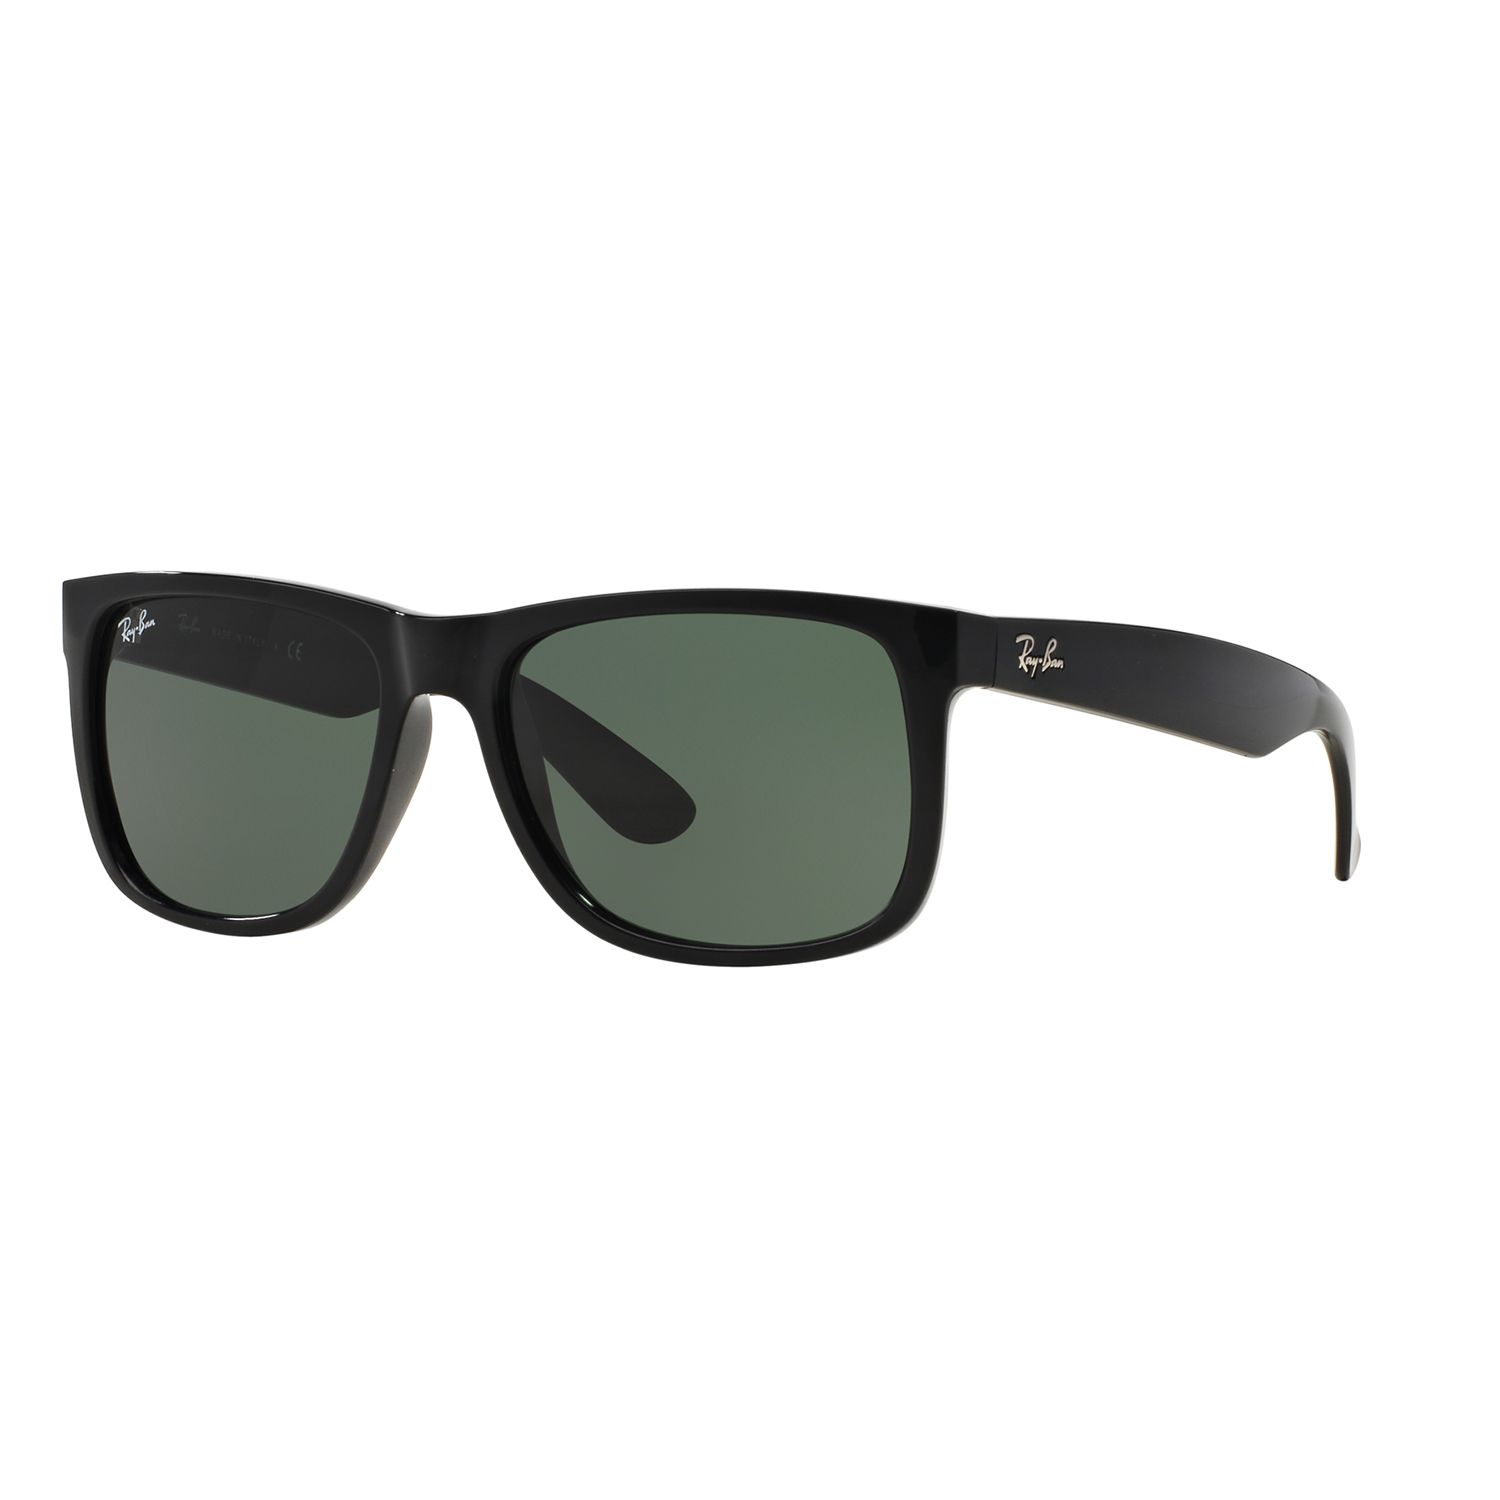 rectangular wayfarer sunglasses